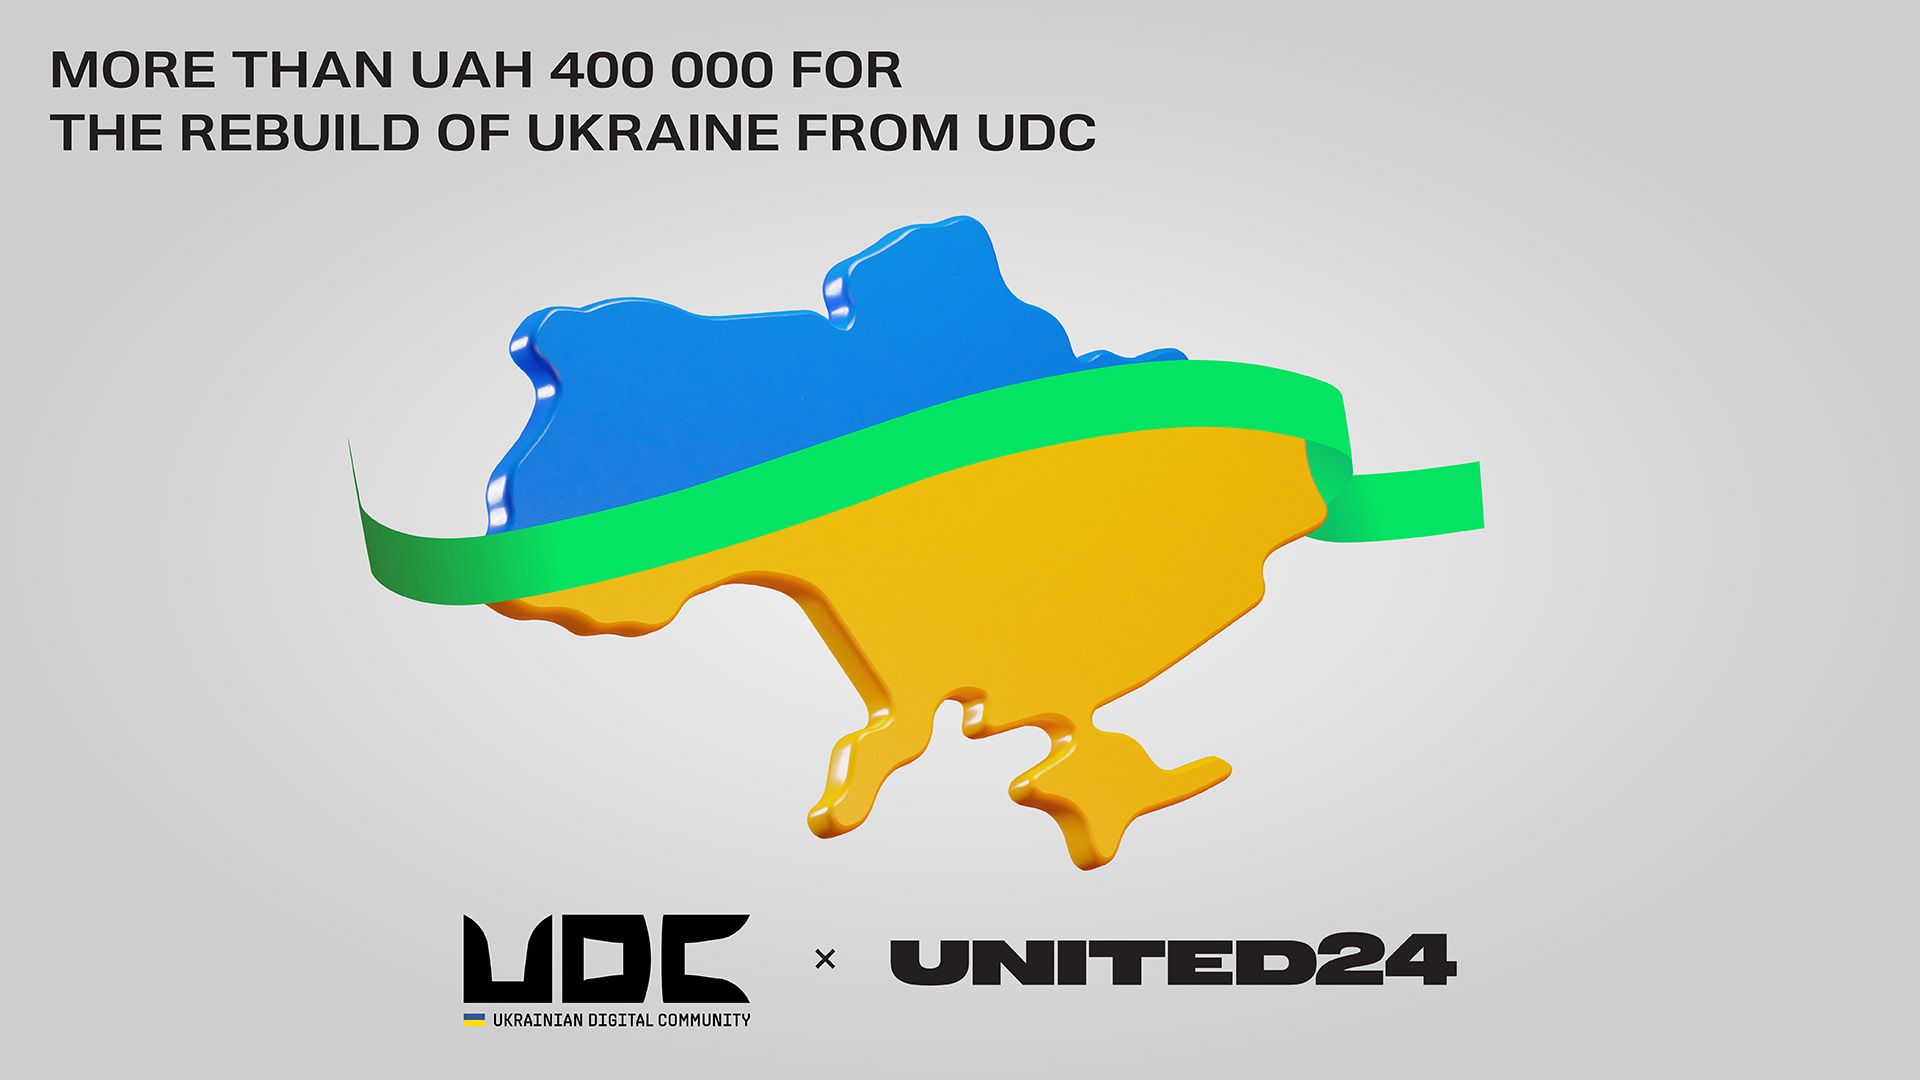 The Ukrainian Digital Community has donated over 400,000 UAH via UNITED24